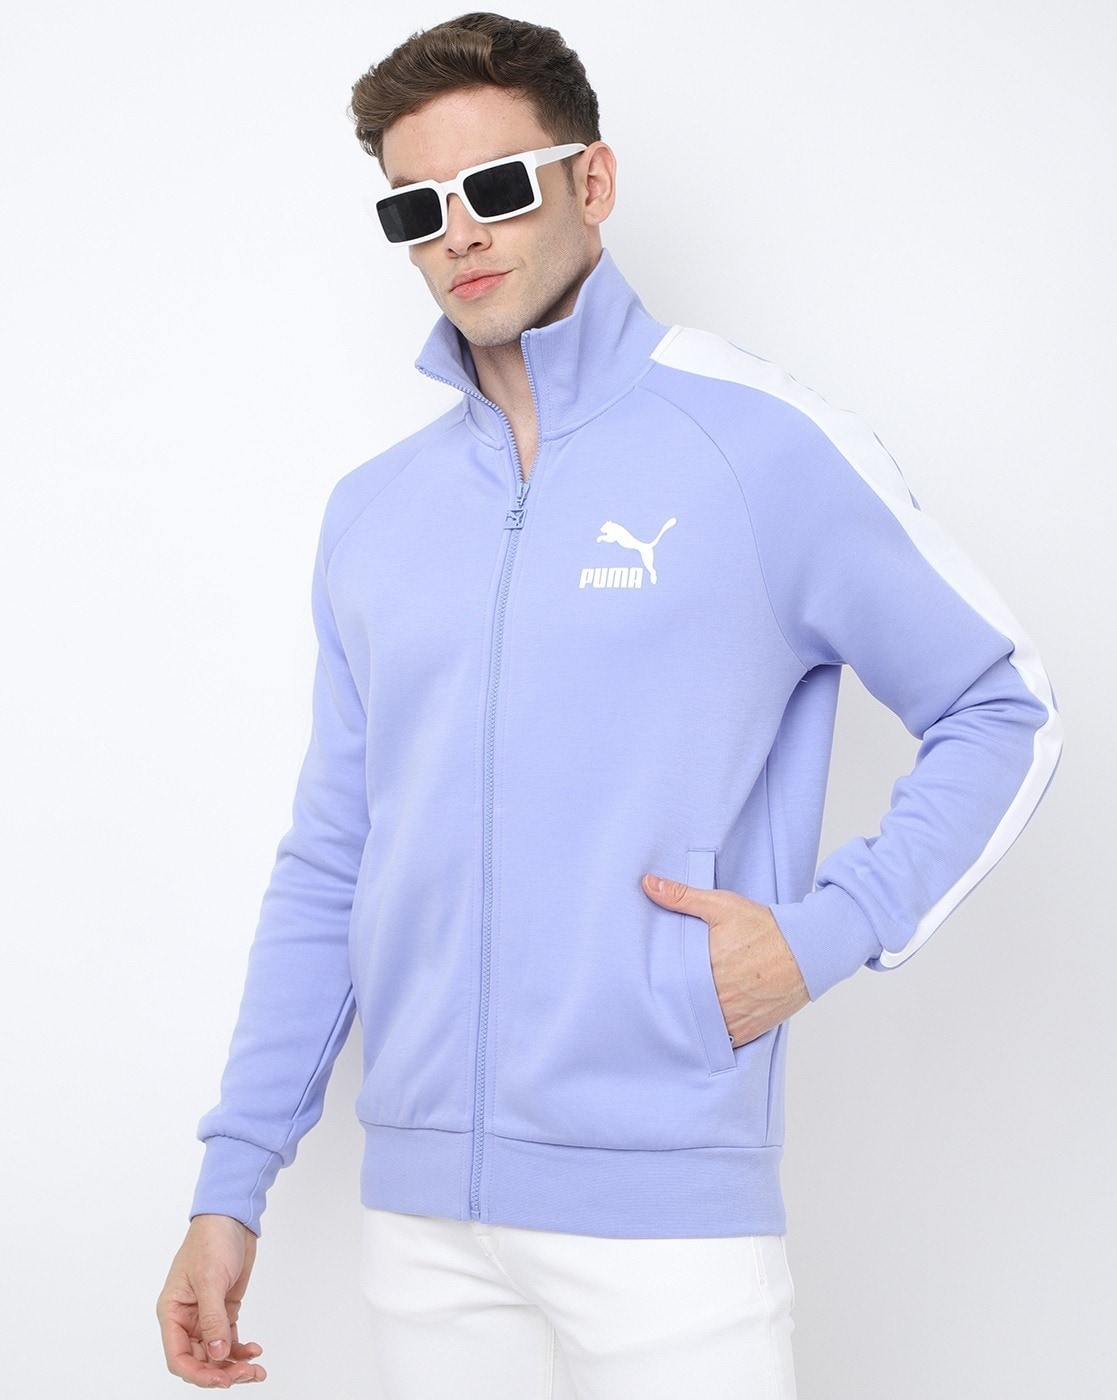 Buy by Men Lavender Coats Jackets for Pop & Online Puma